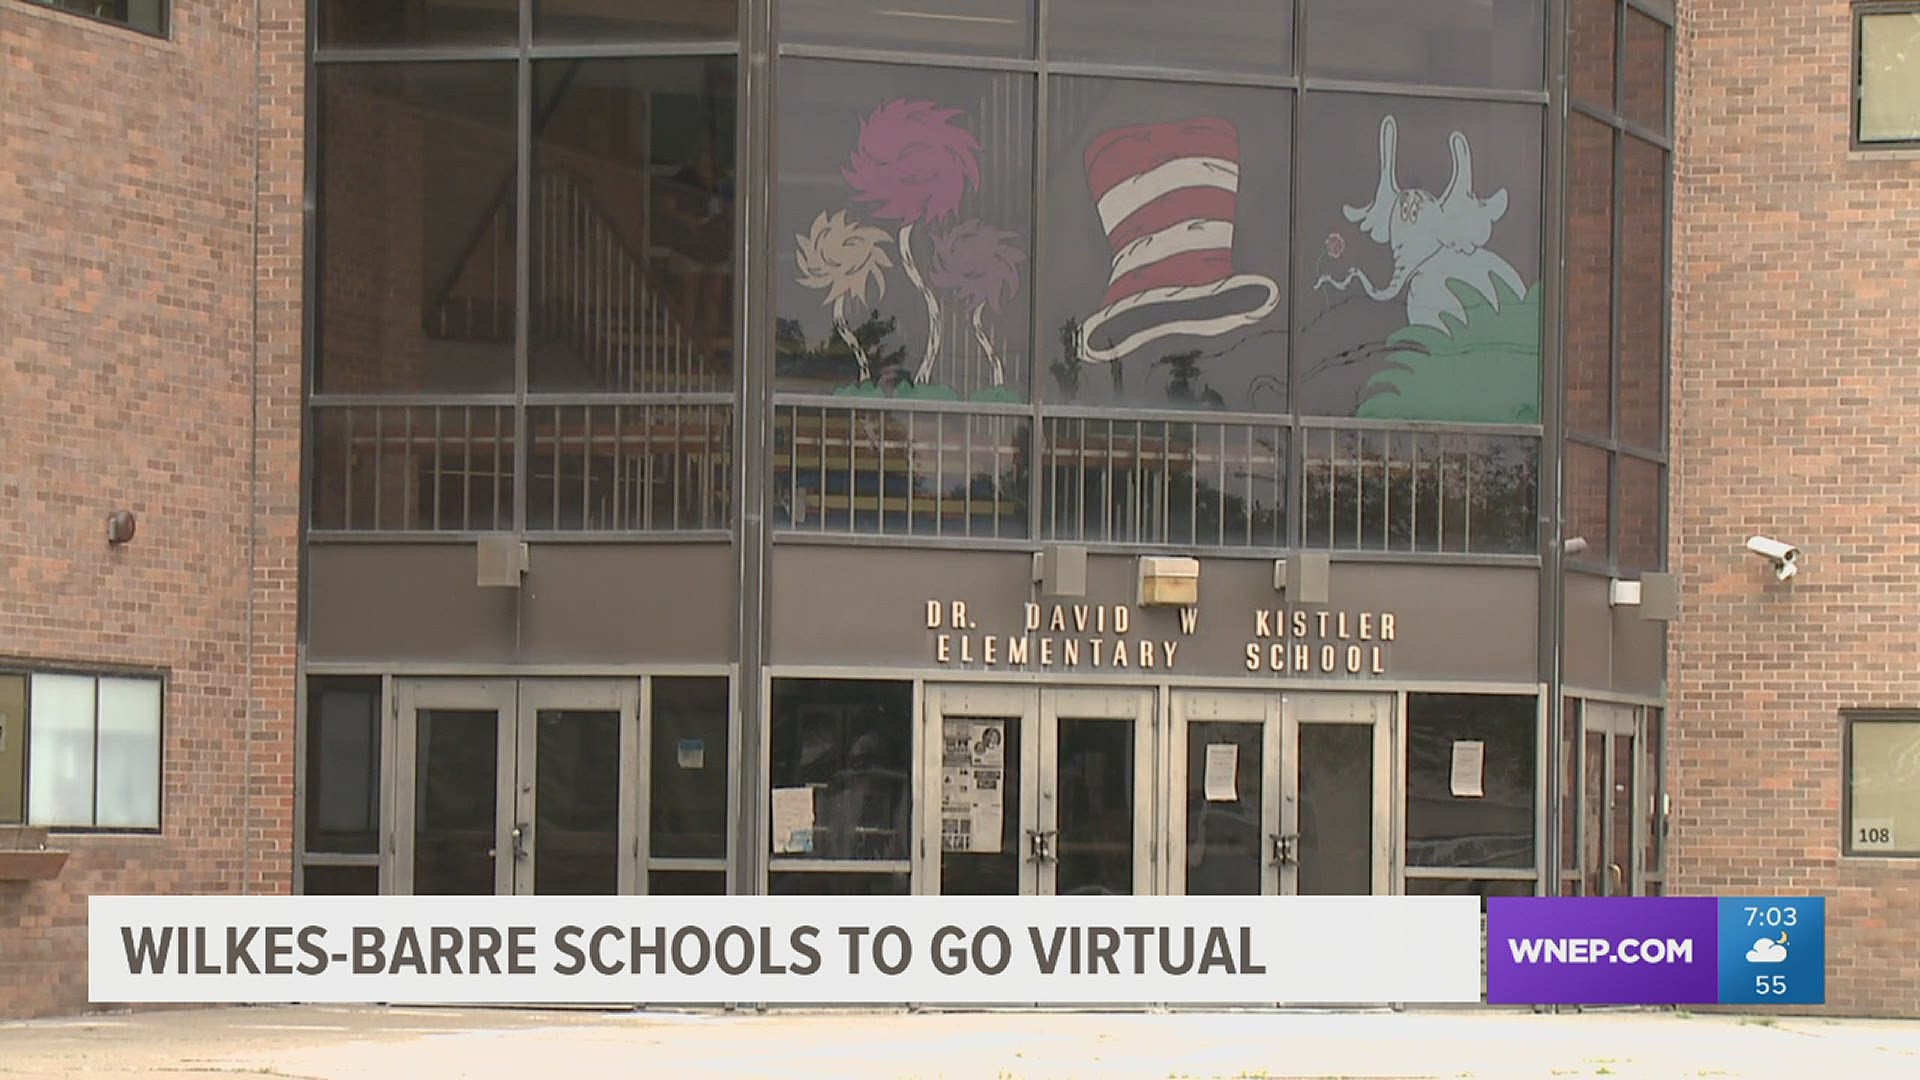 Wilkes-Barre schools to go virtual | wtsp.com